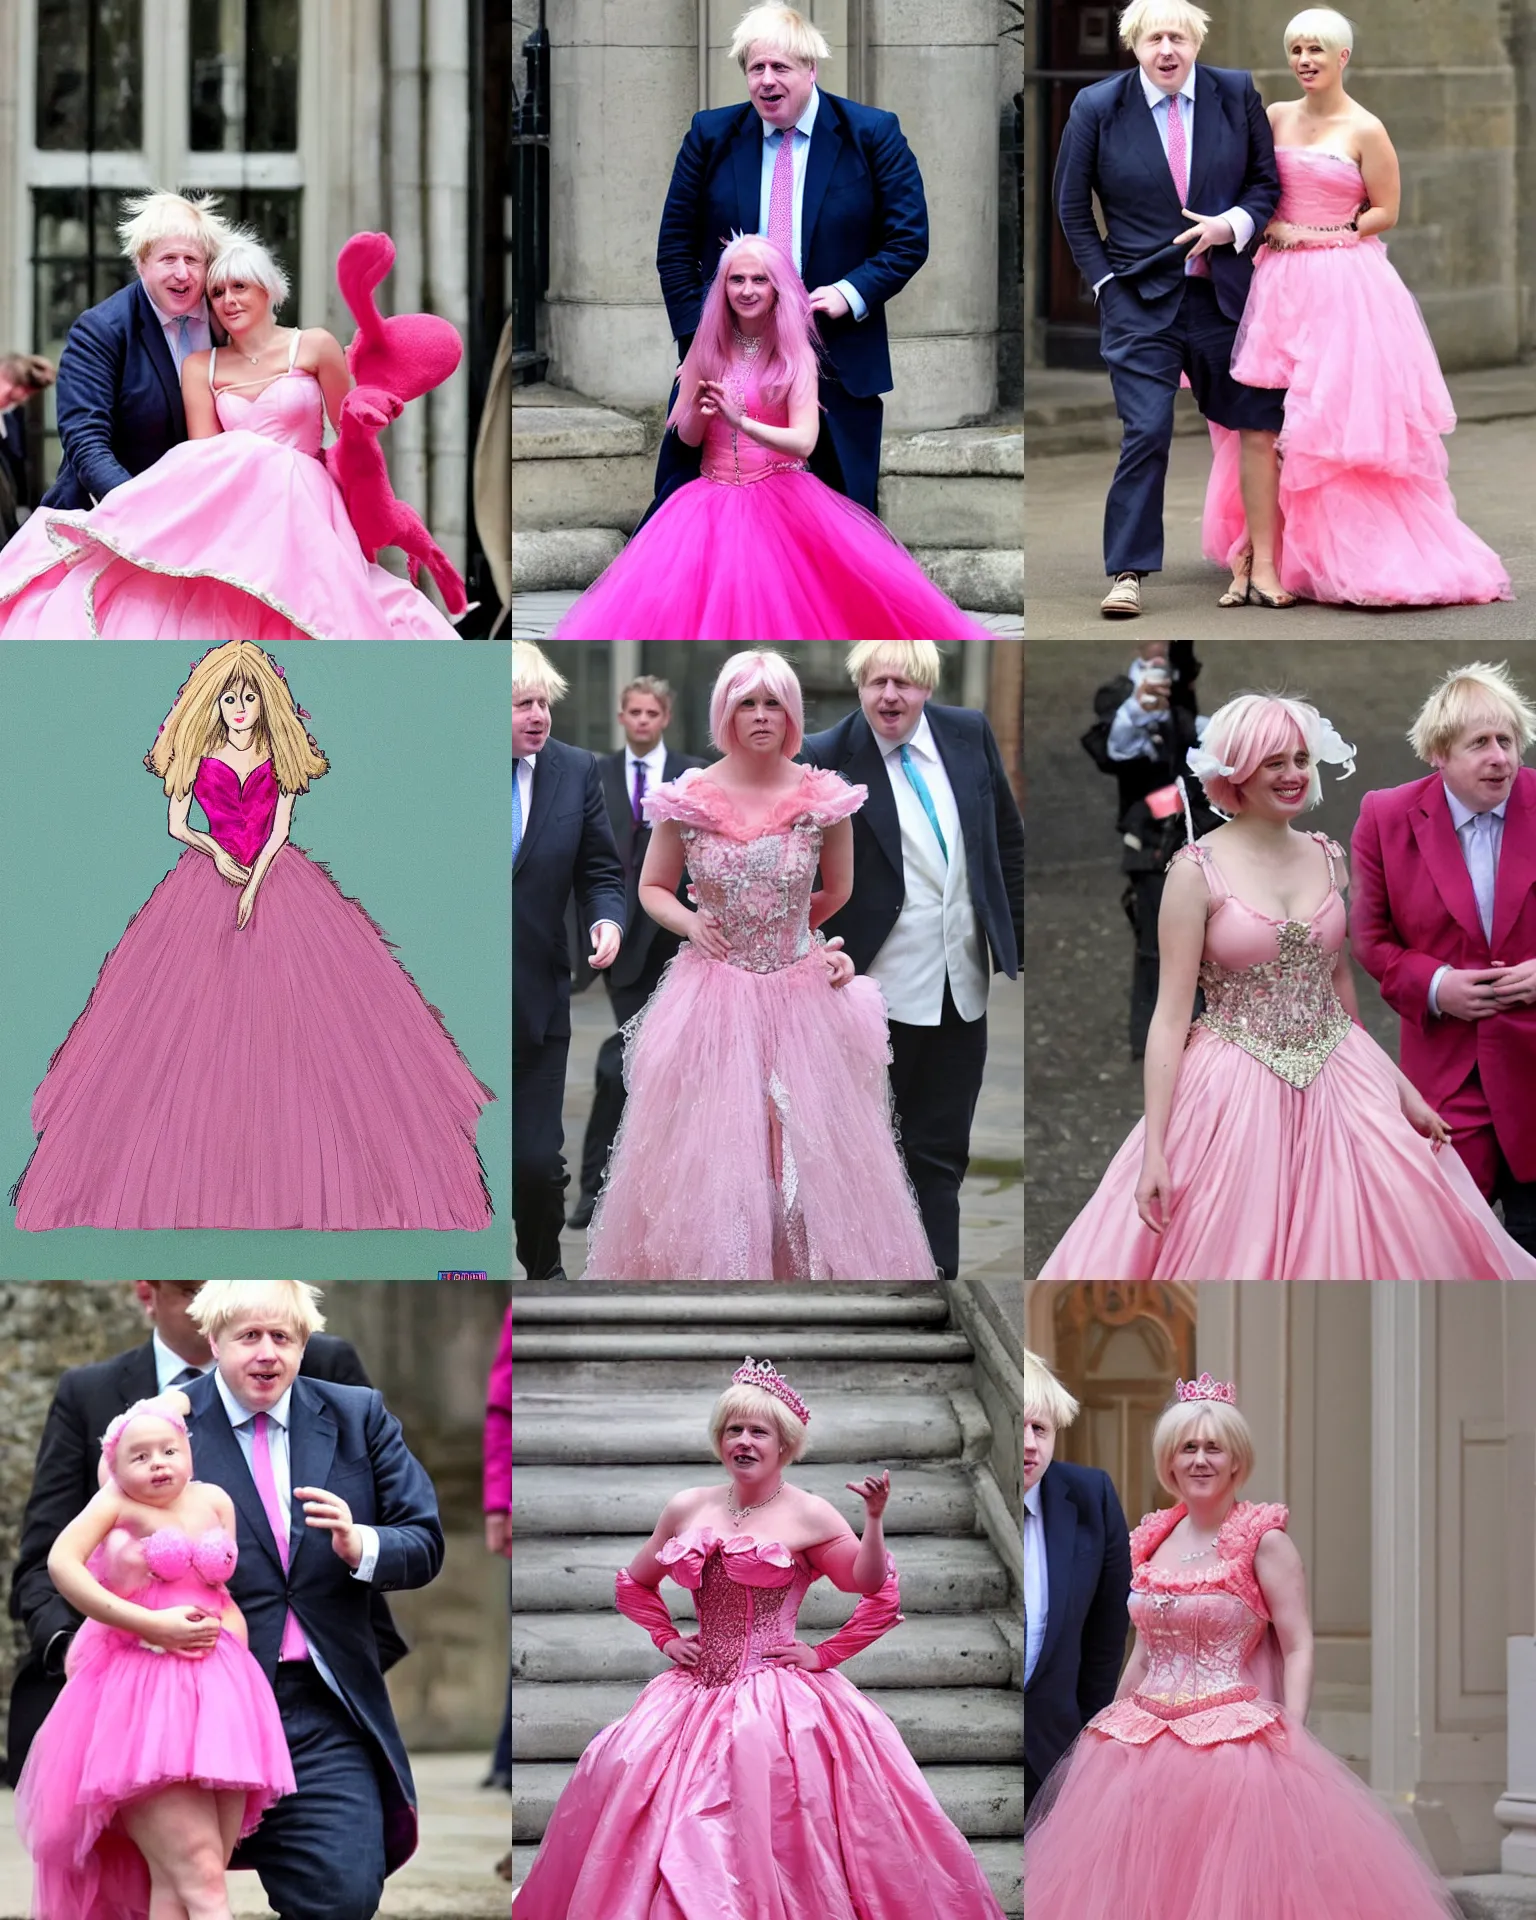 Prompt: boris johnson as a beautiful pink princess wearing a ball gown